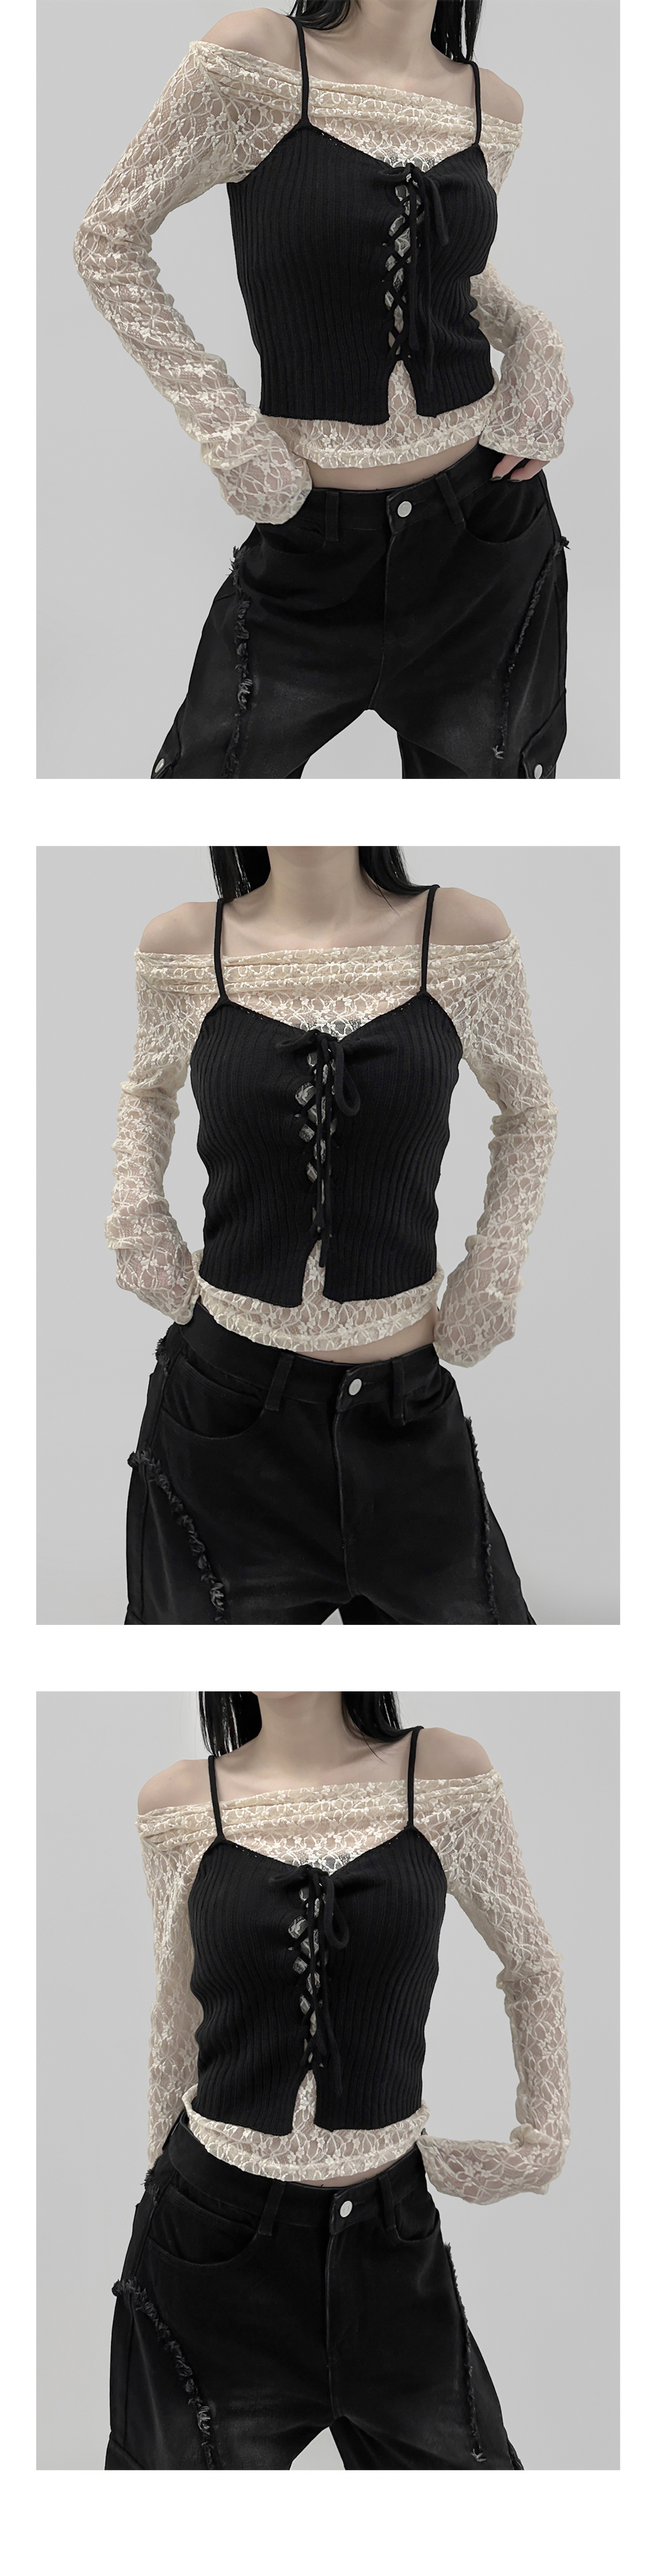 suspenders skirt/pants charcoal color image-S1L12